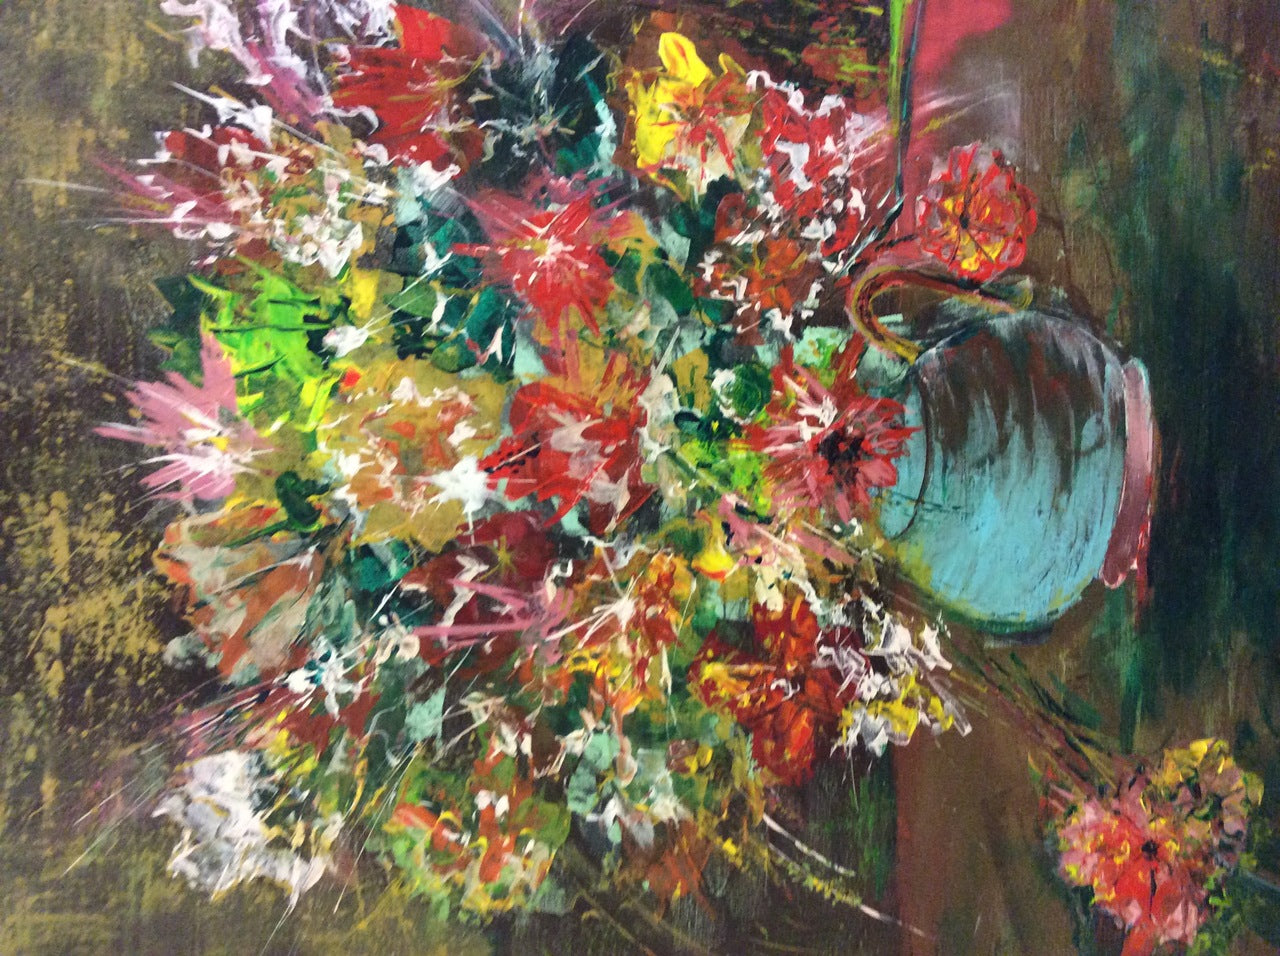 Johnny Valbrun (II) (Dcd 2005) 20"x16" Vase of Flowers  1989 Acrylic on Canvas #10-3-96MFN